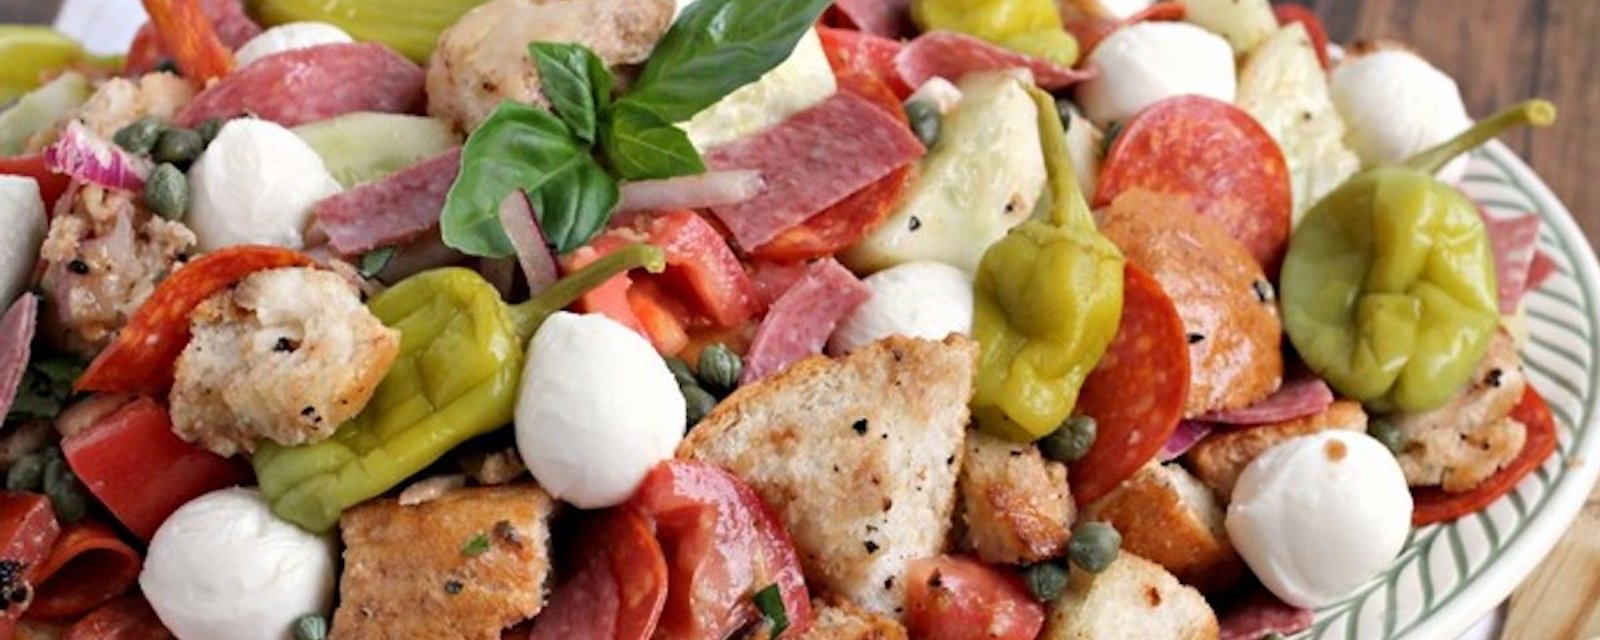 Salade d'antipasti italienne 